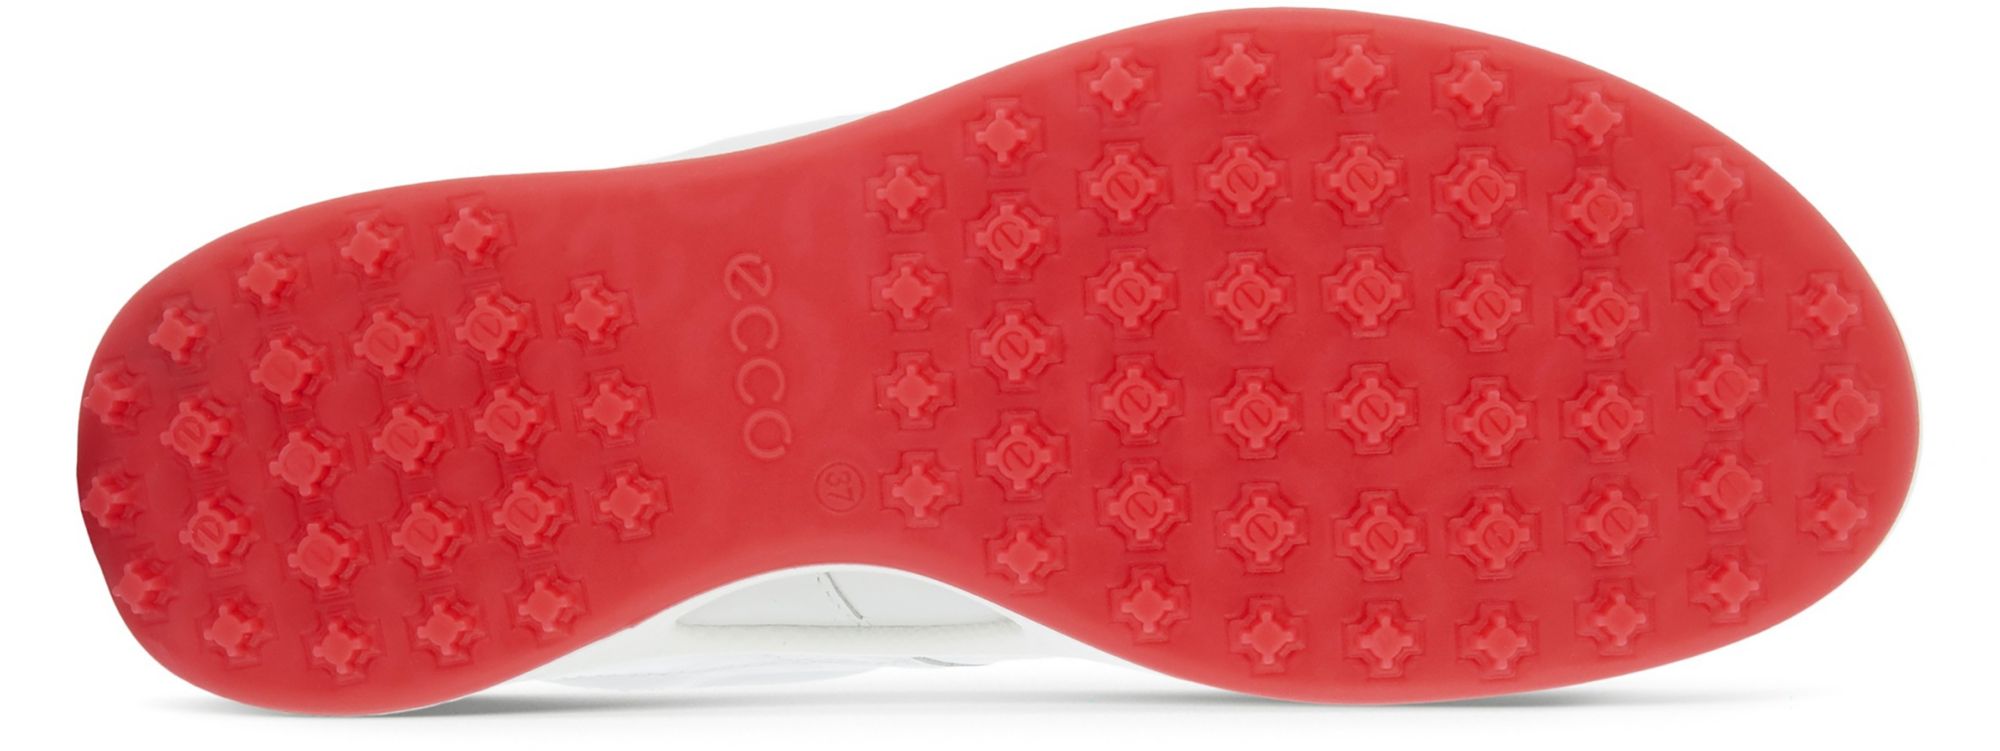 ECCO Women's BIOM Hybrid Golf Shoes